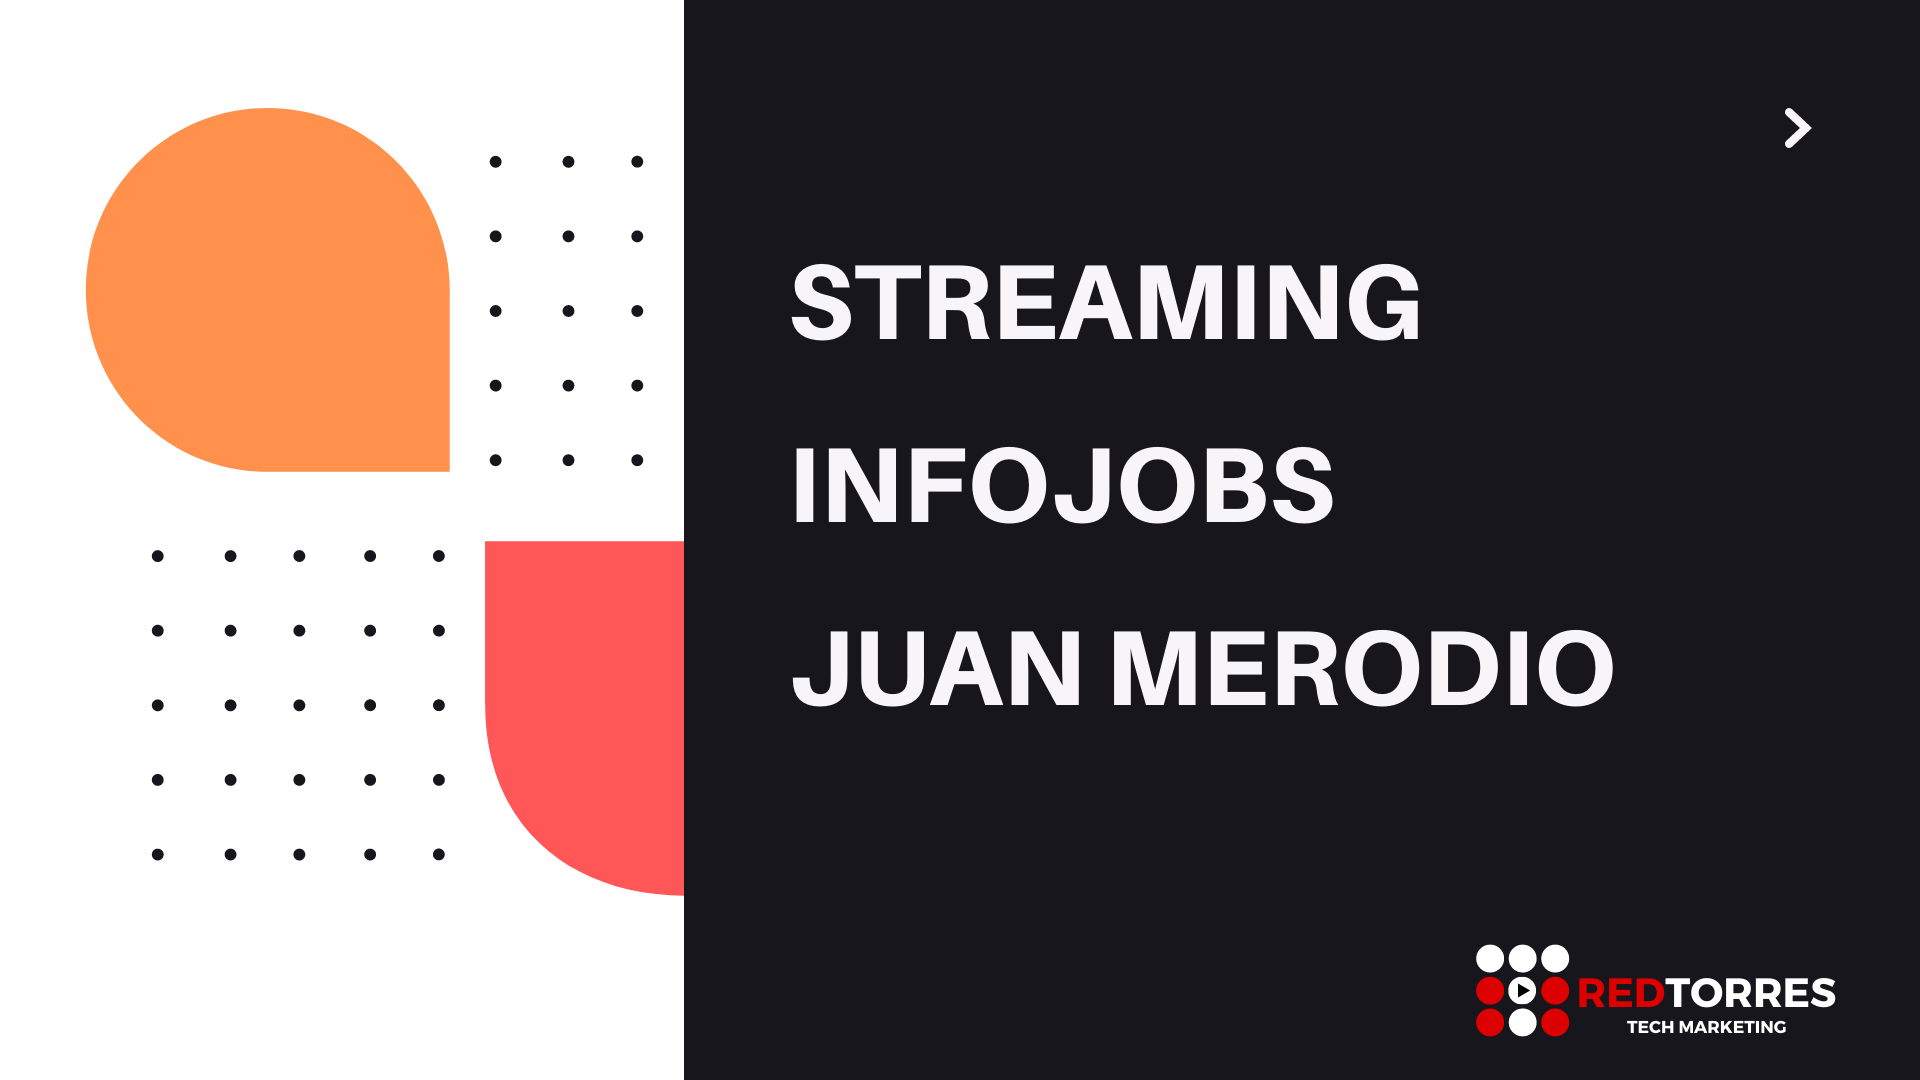 Streaming Madrid con Juan Merodio para Infojobs | REDTORRES